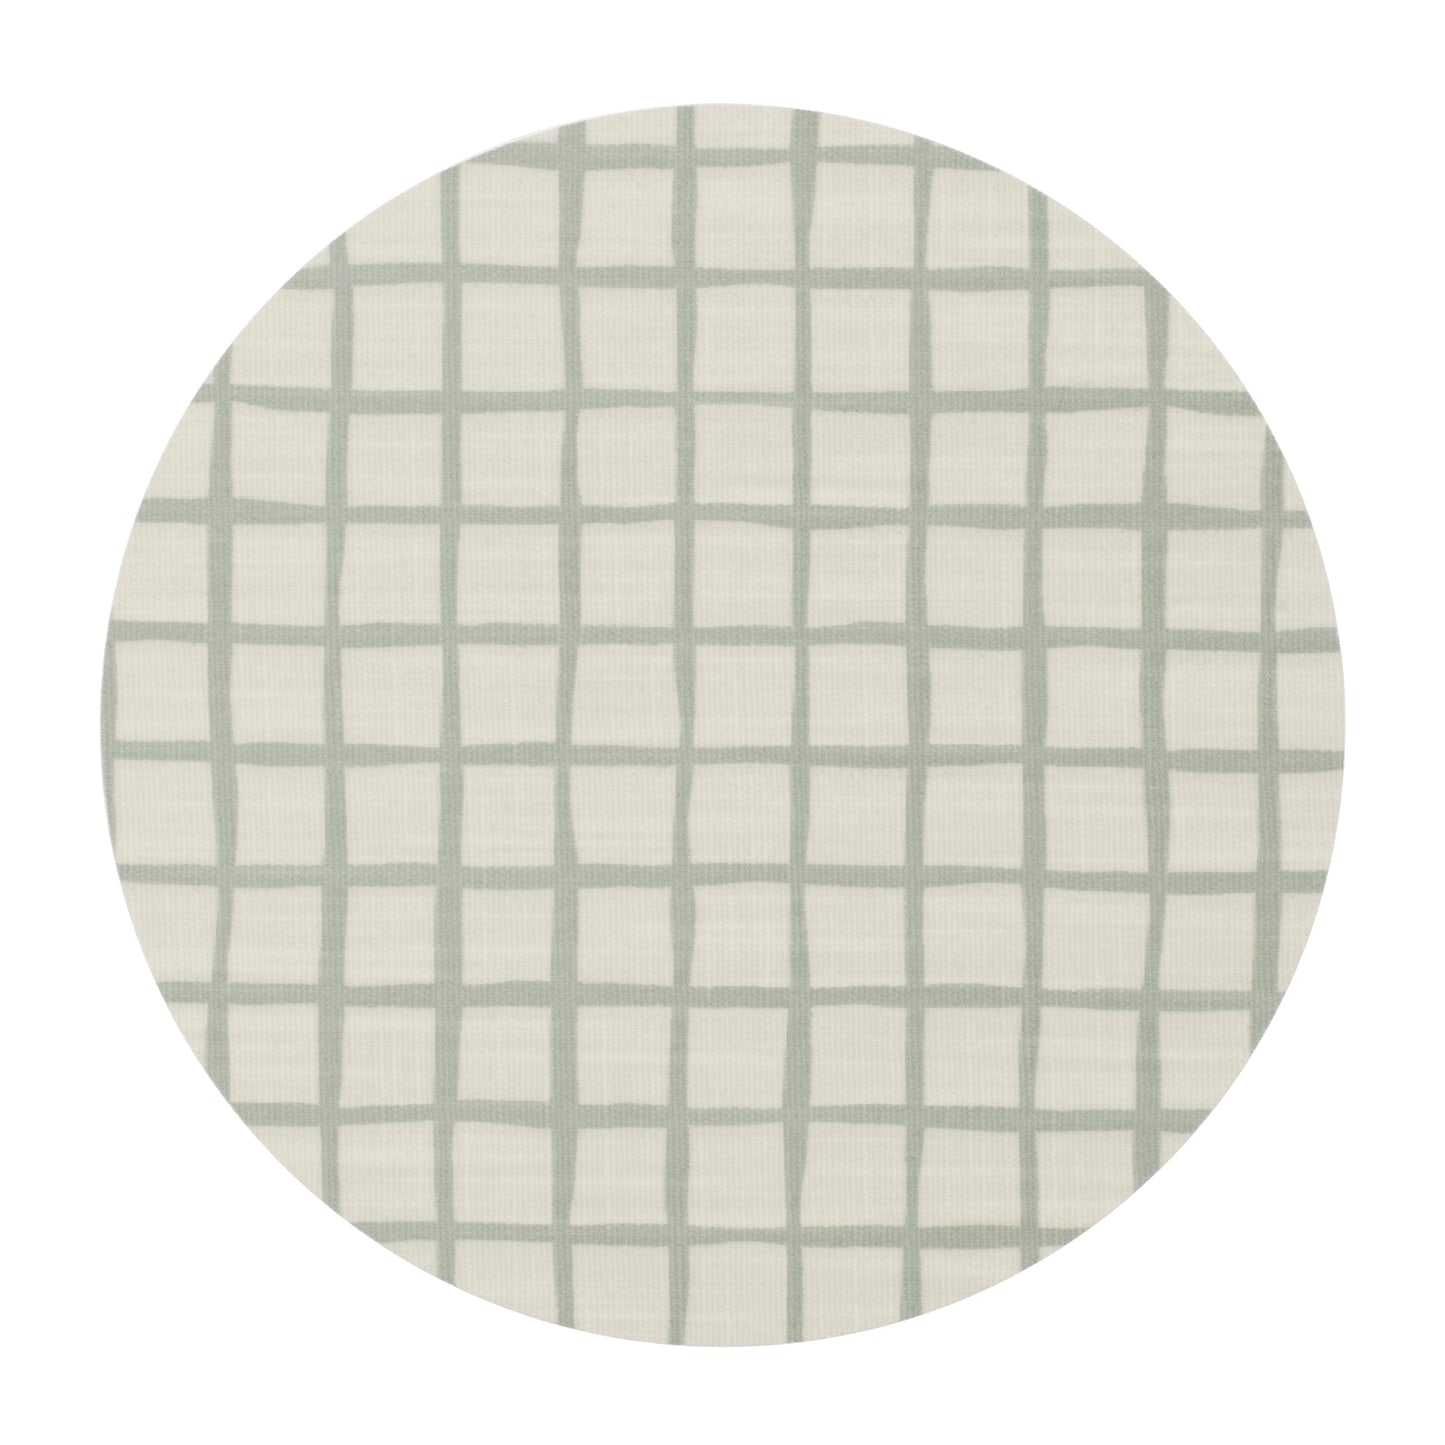 Grid print pot mat/Board 21cm - Sage